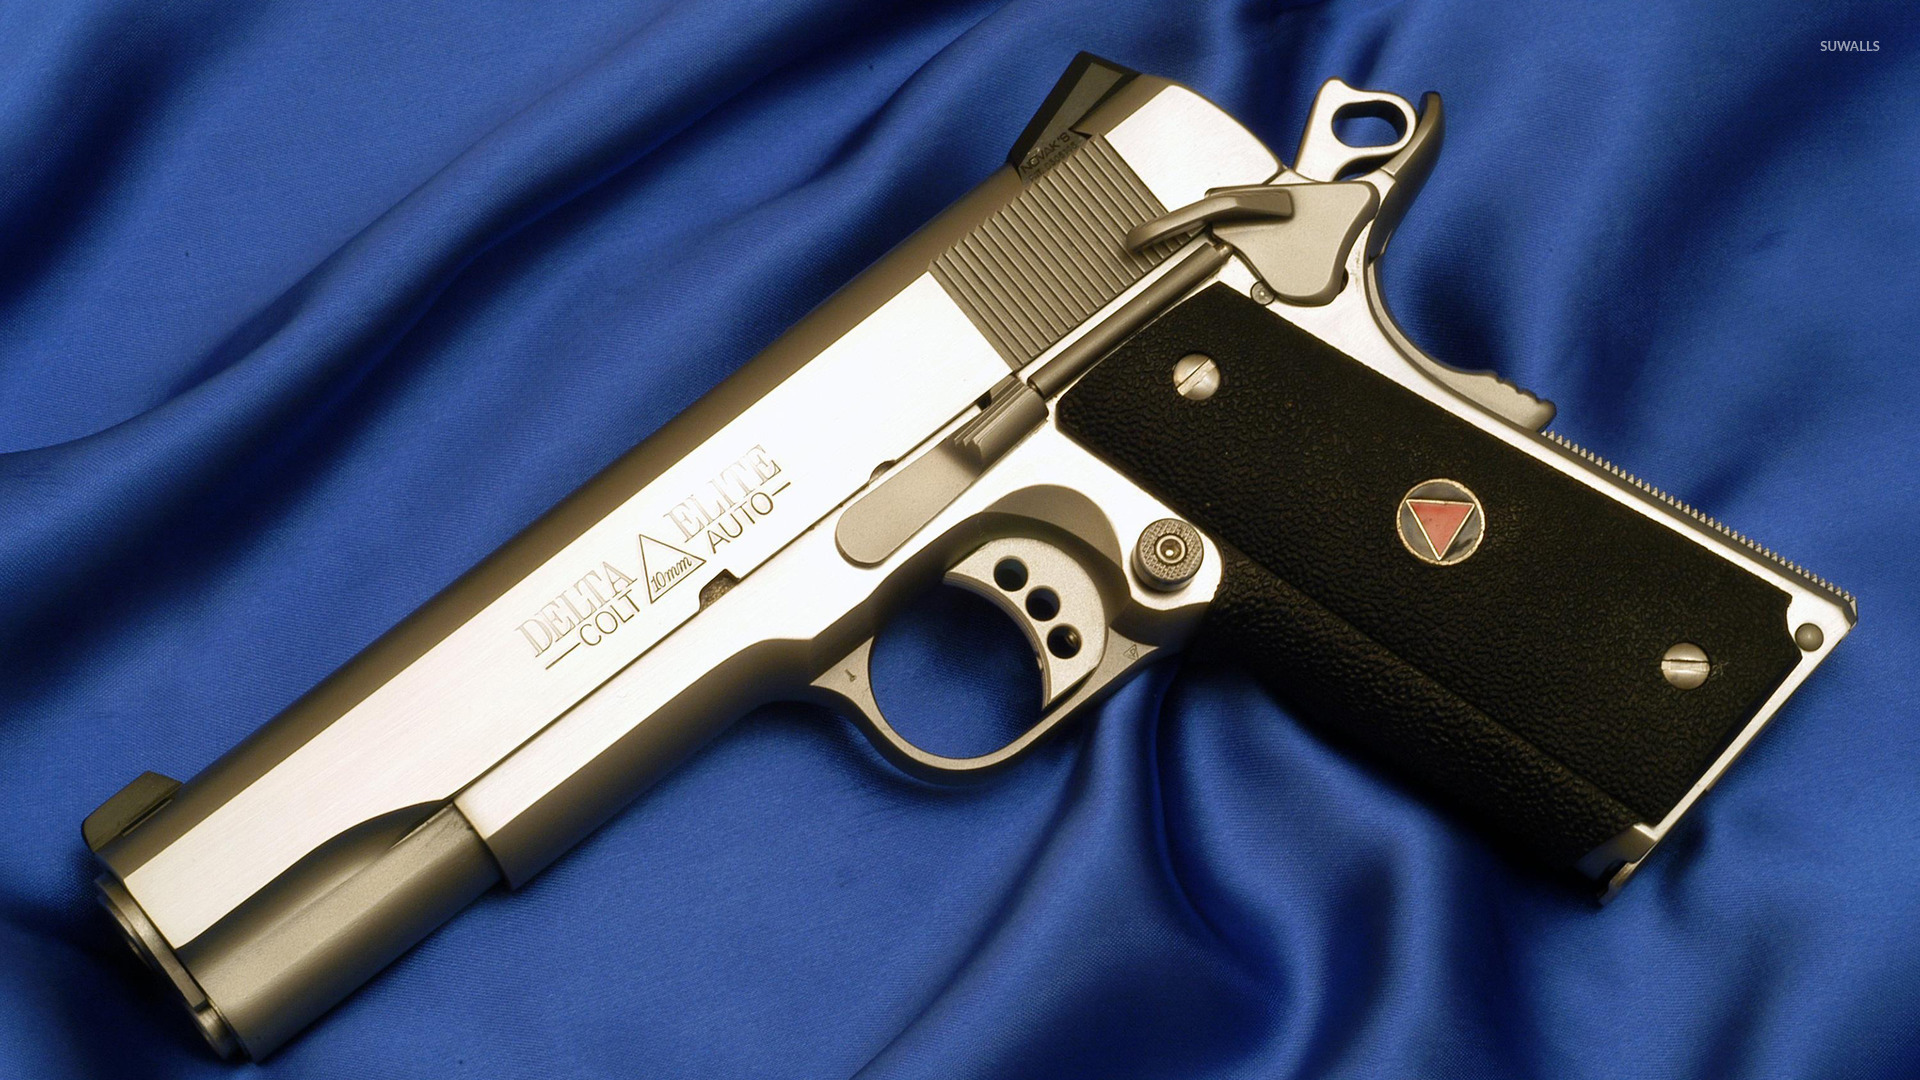 Colt M1911 Pistol Wallpaper Photography